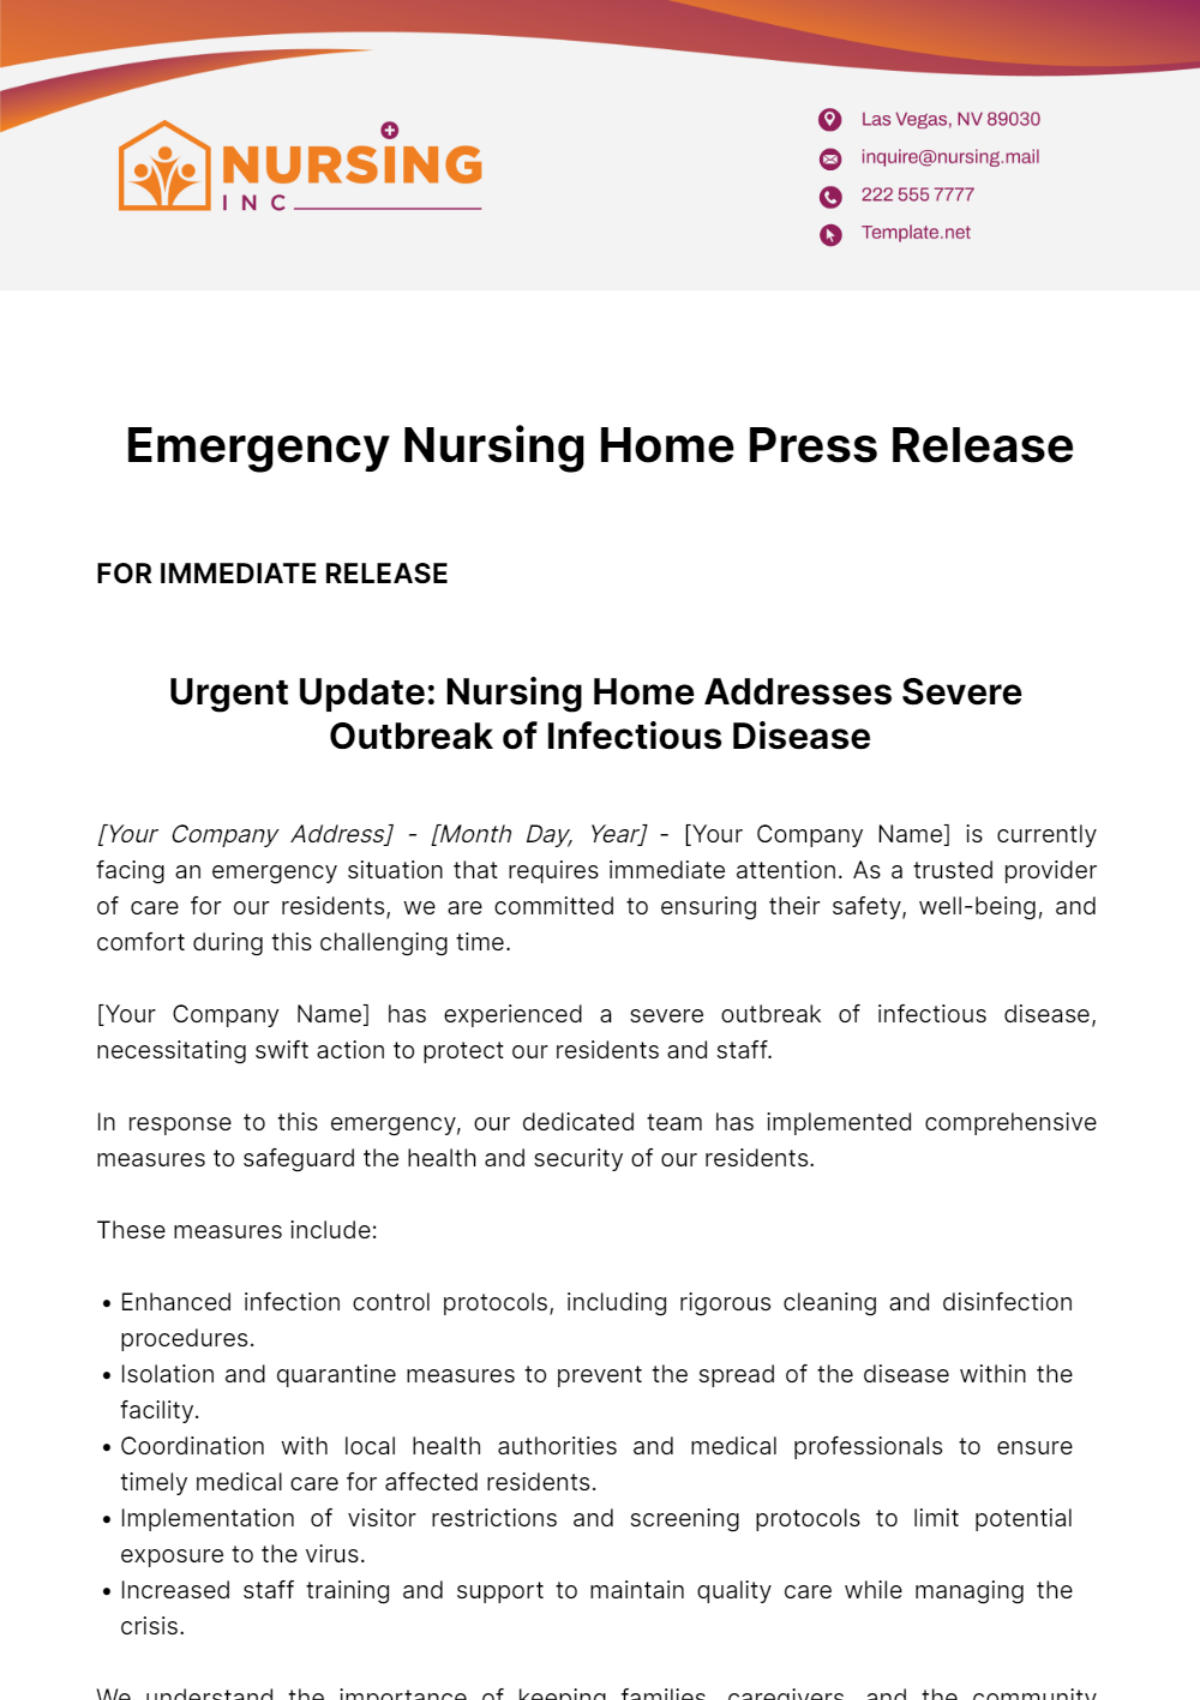 Emergency Nursing Home Press Release Template